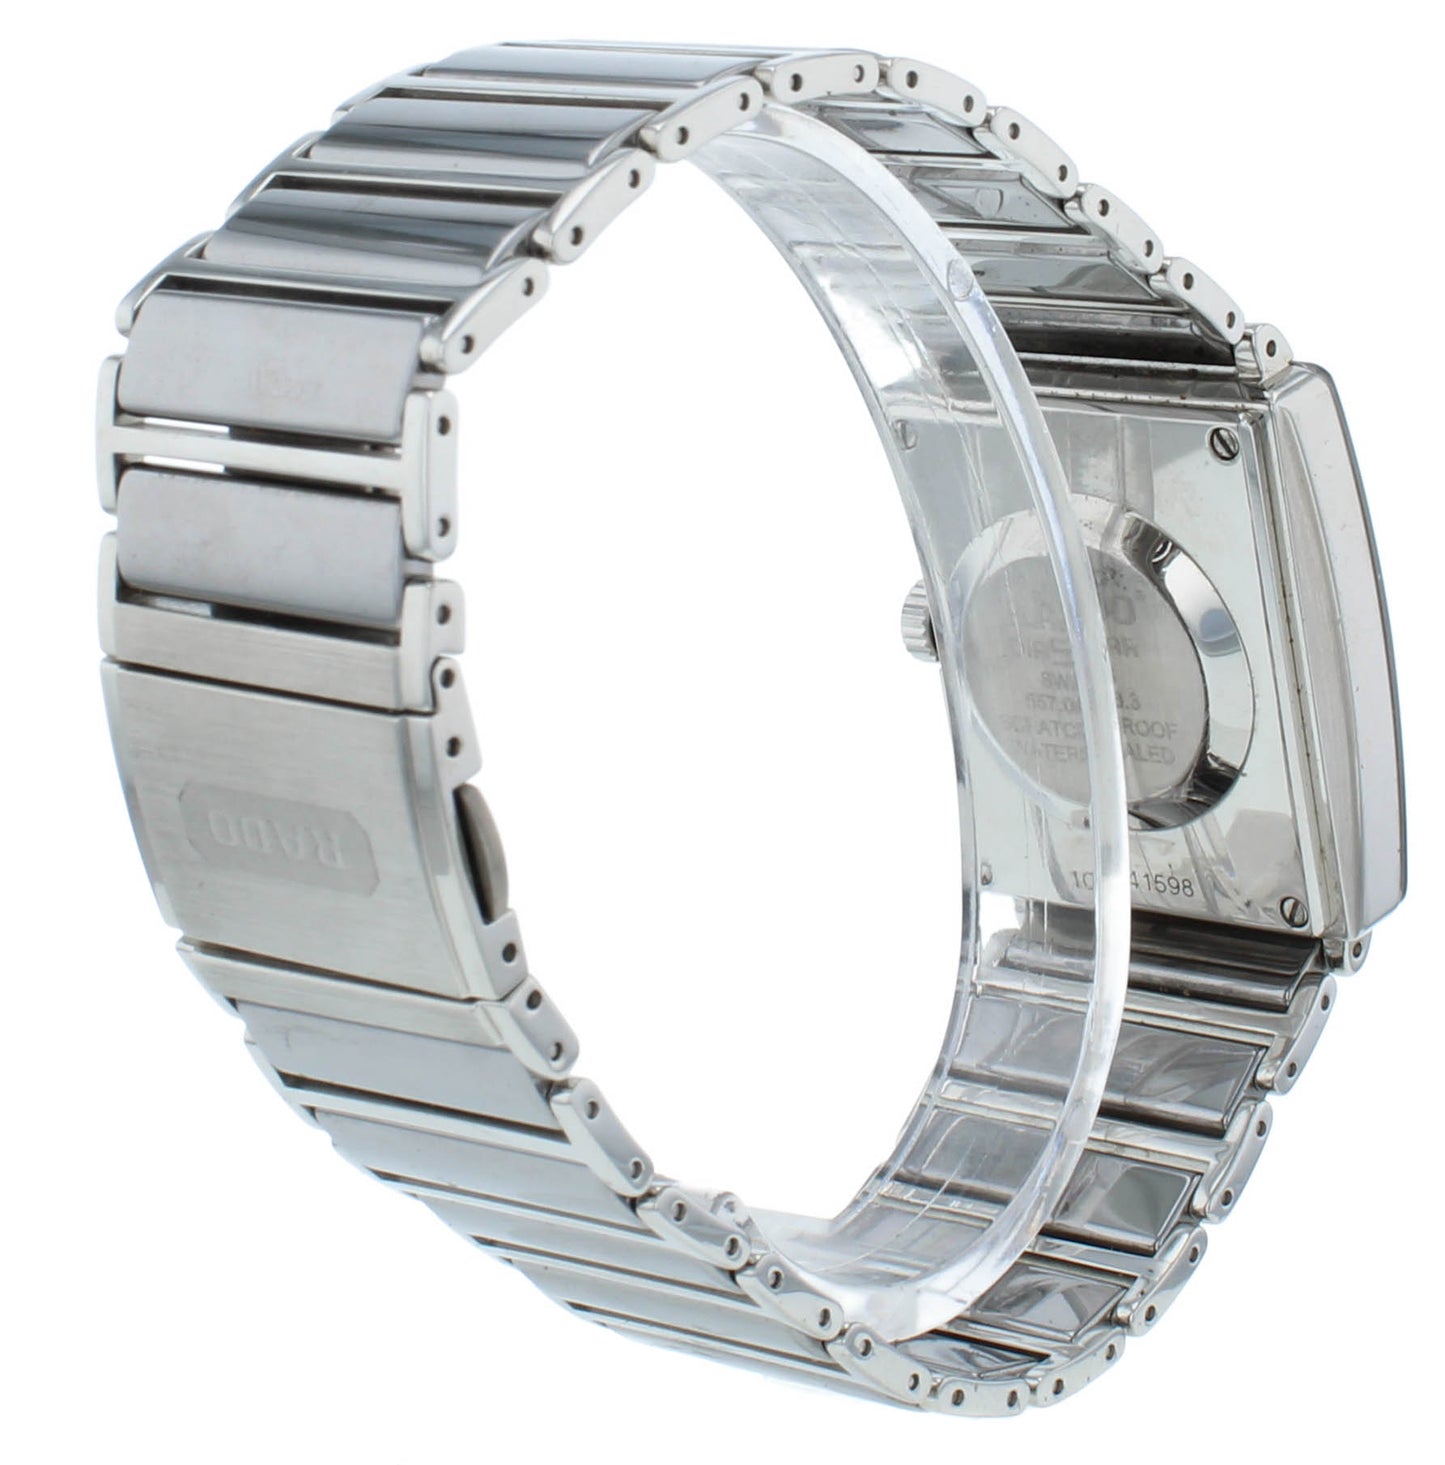 Rado Integral 27mm White Dial Automatic Steel & Ceramic Ladies Watch R20693102